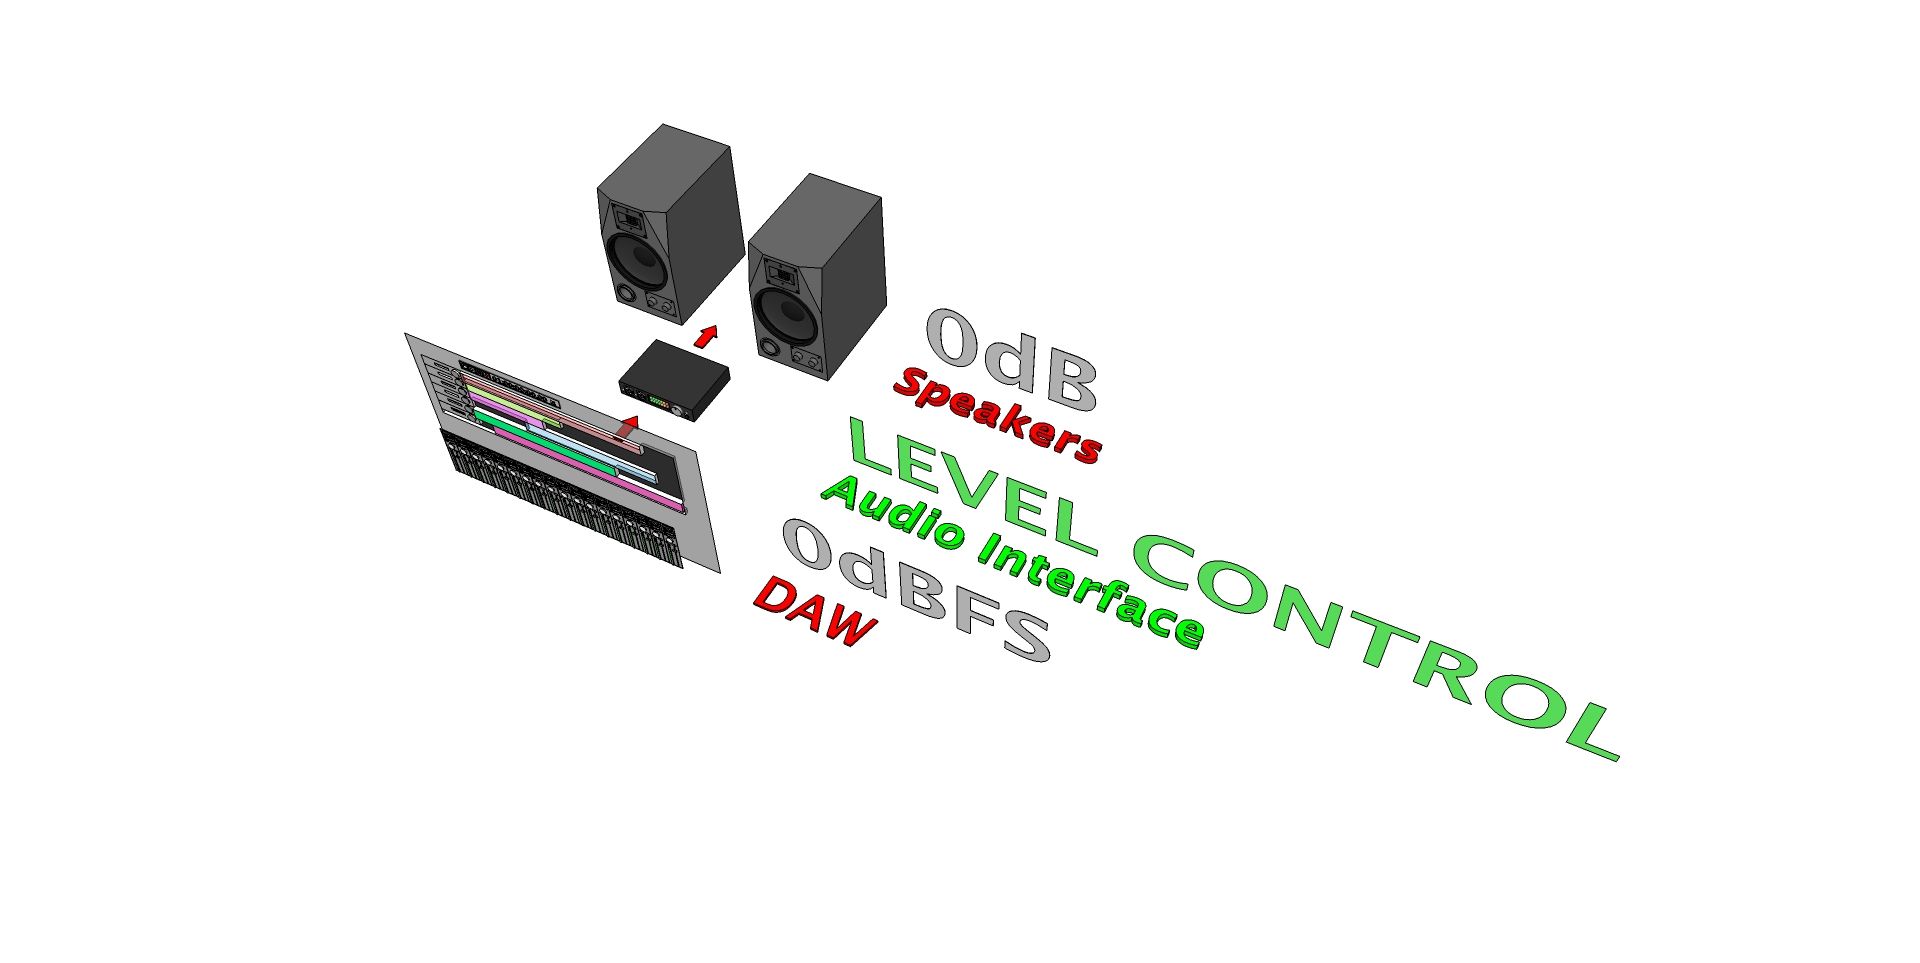 Audio Interface as level controller